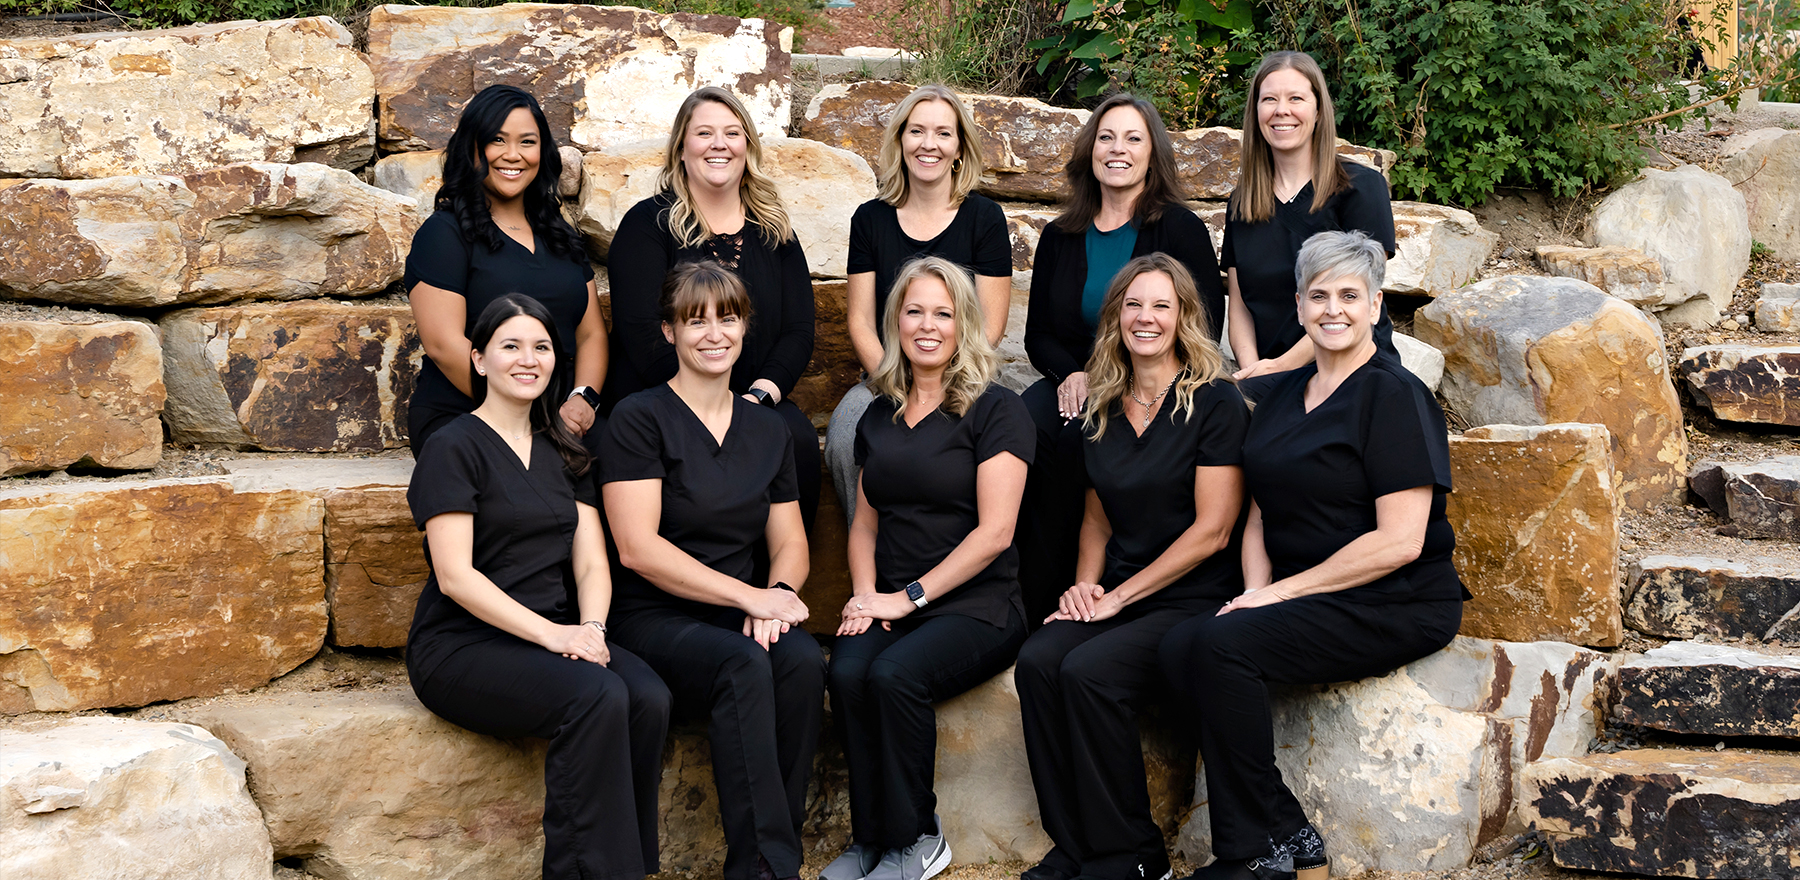 Our dental team